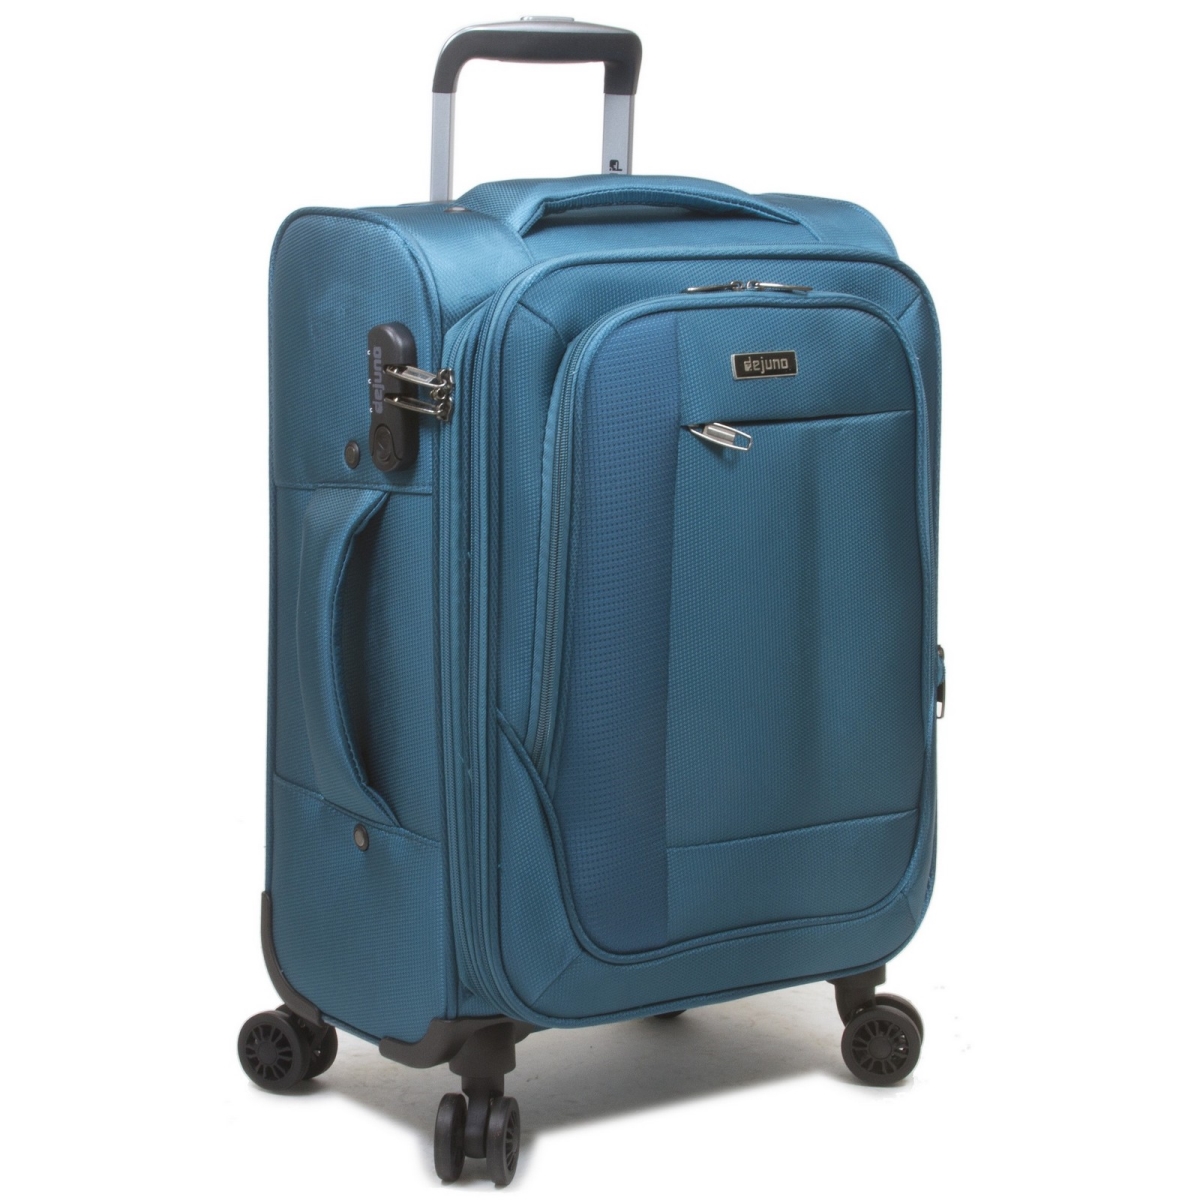 Picture of Dejuno 2002DJ-TURQUOISE Twilight Lightweight Nylon Spinner Luggage Set, Turquoise - 3 Piece